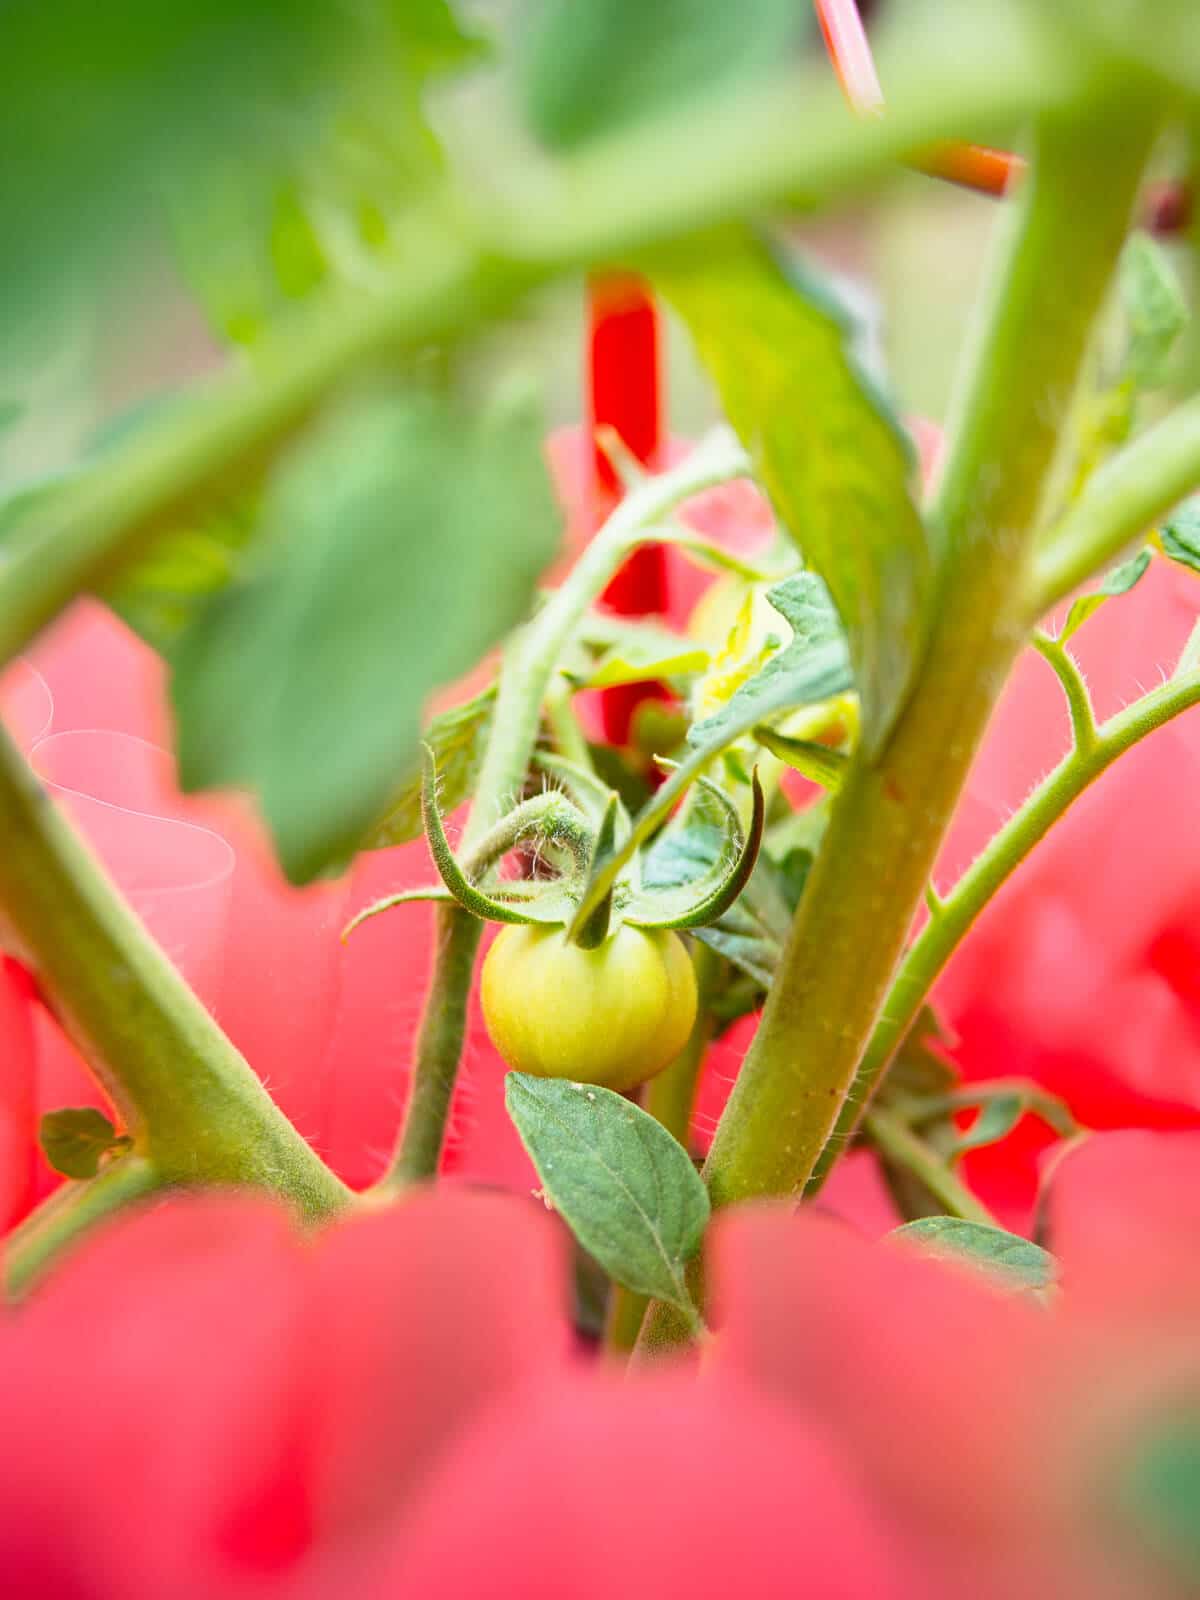 Immature tomatoes on the vine